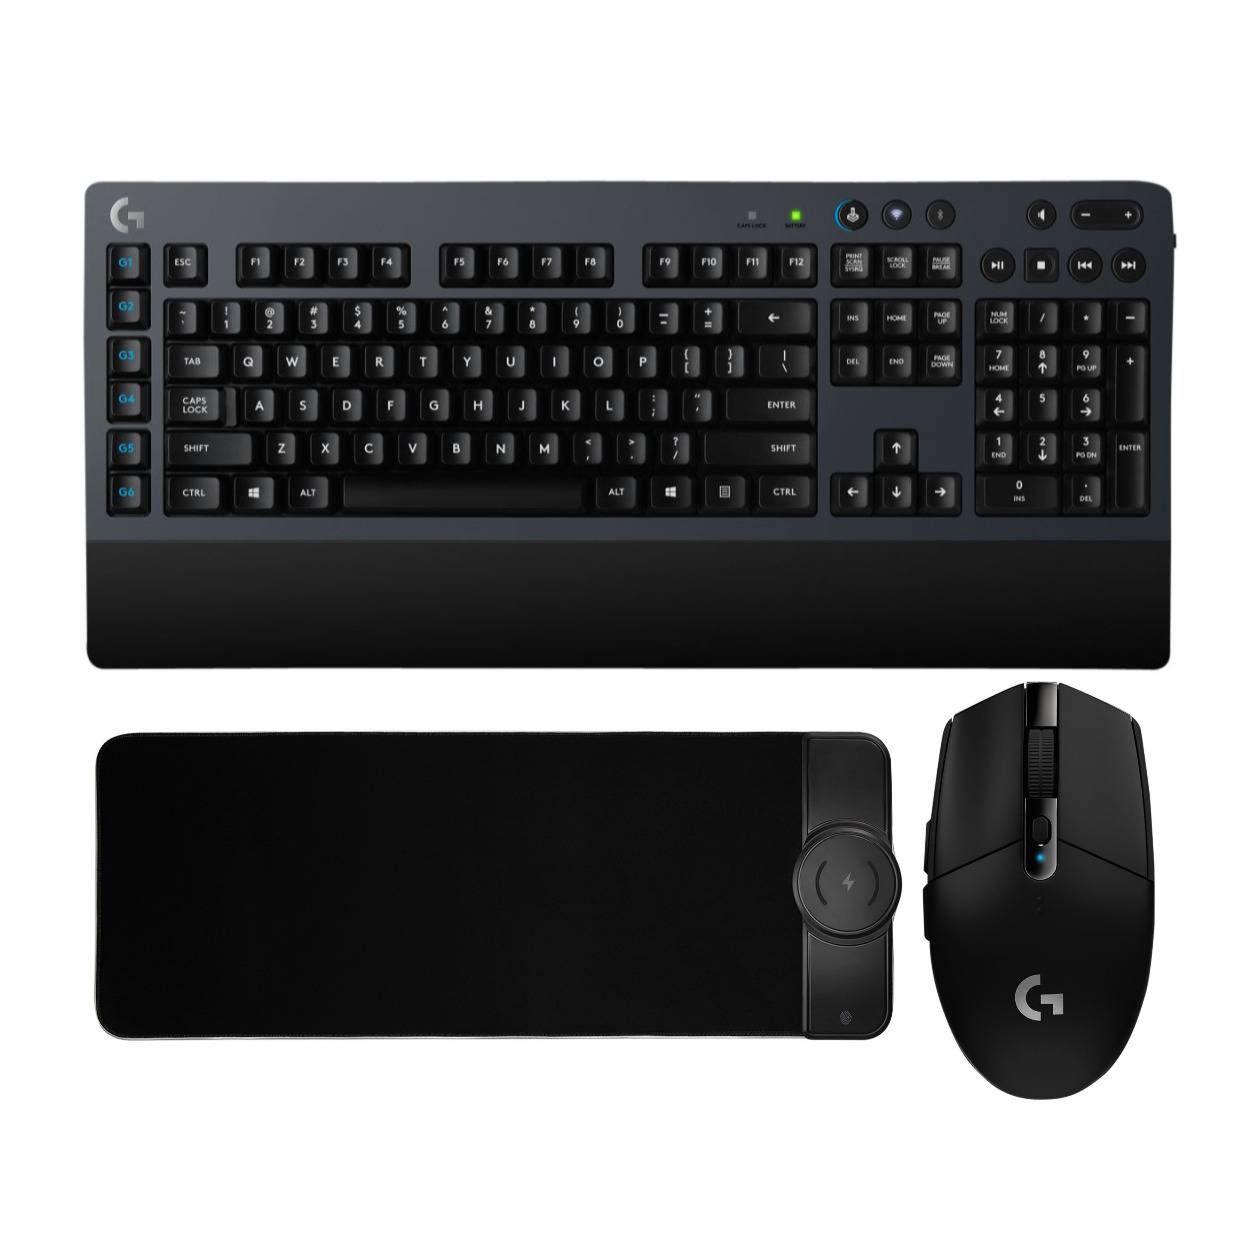 Logitech G613 Gaming Keyboard Bundle With Logitech G305 Gaming Mouse and Kratos MousePad